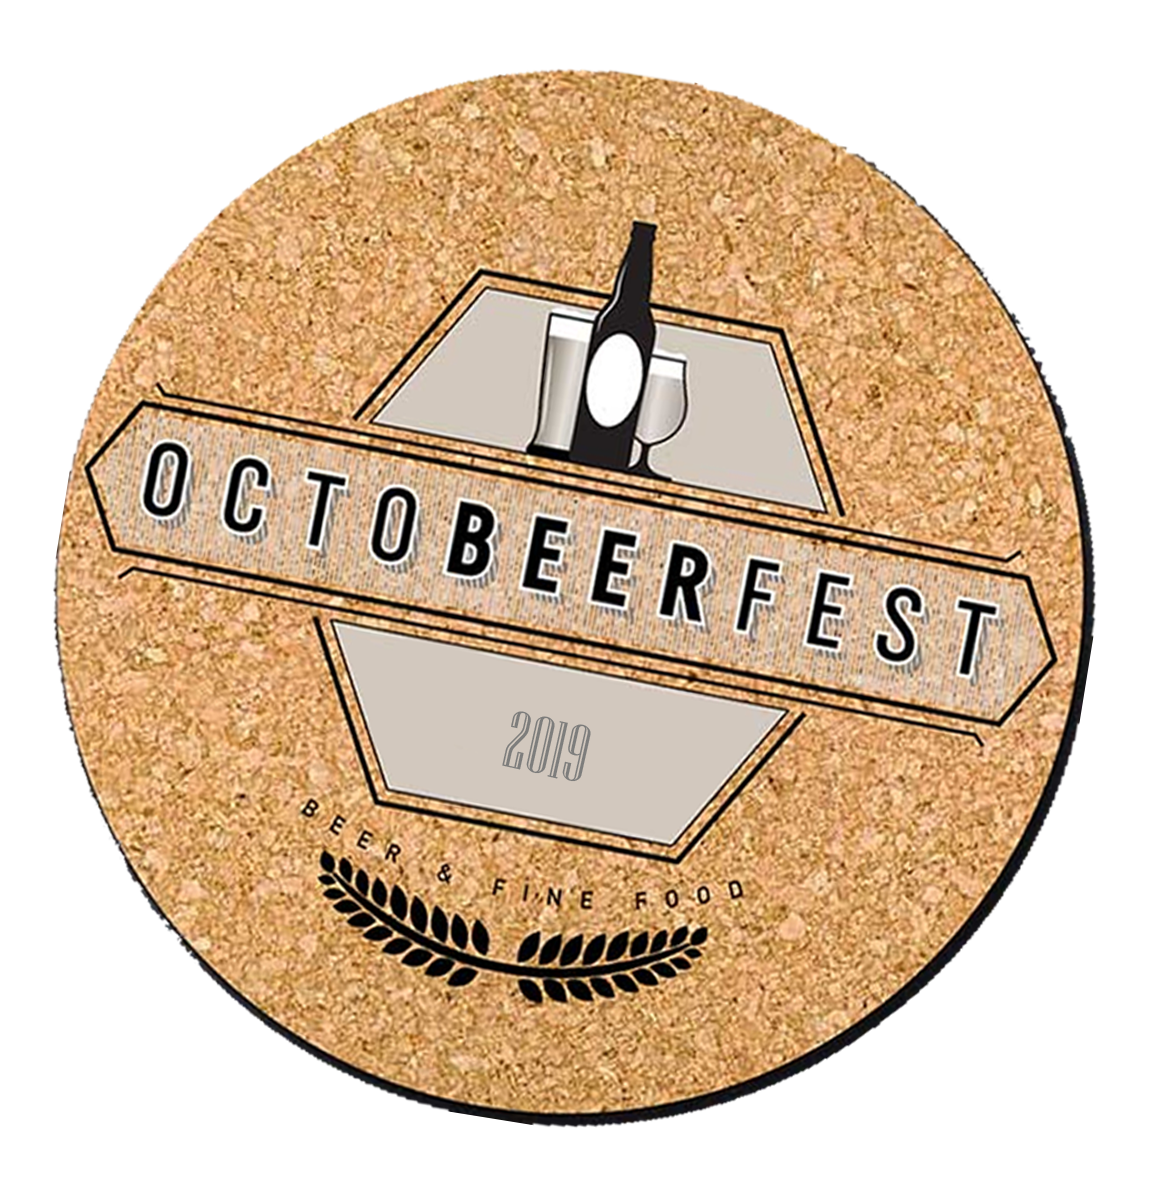 Octobeerfest 2017